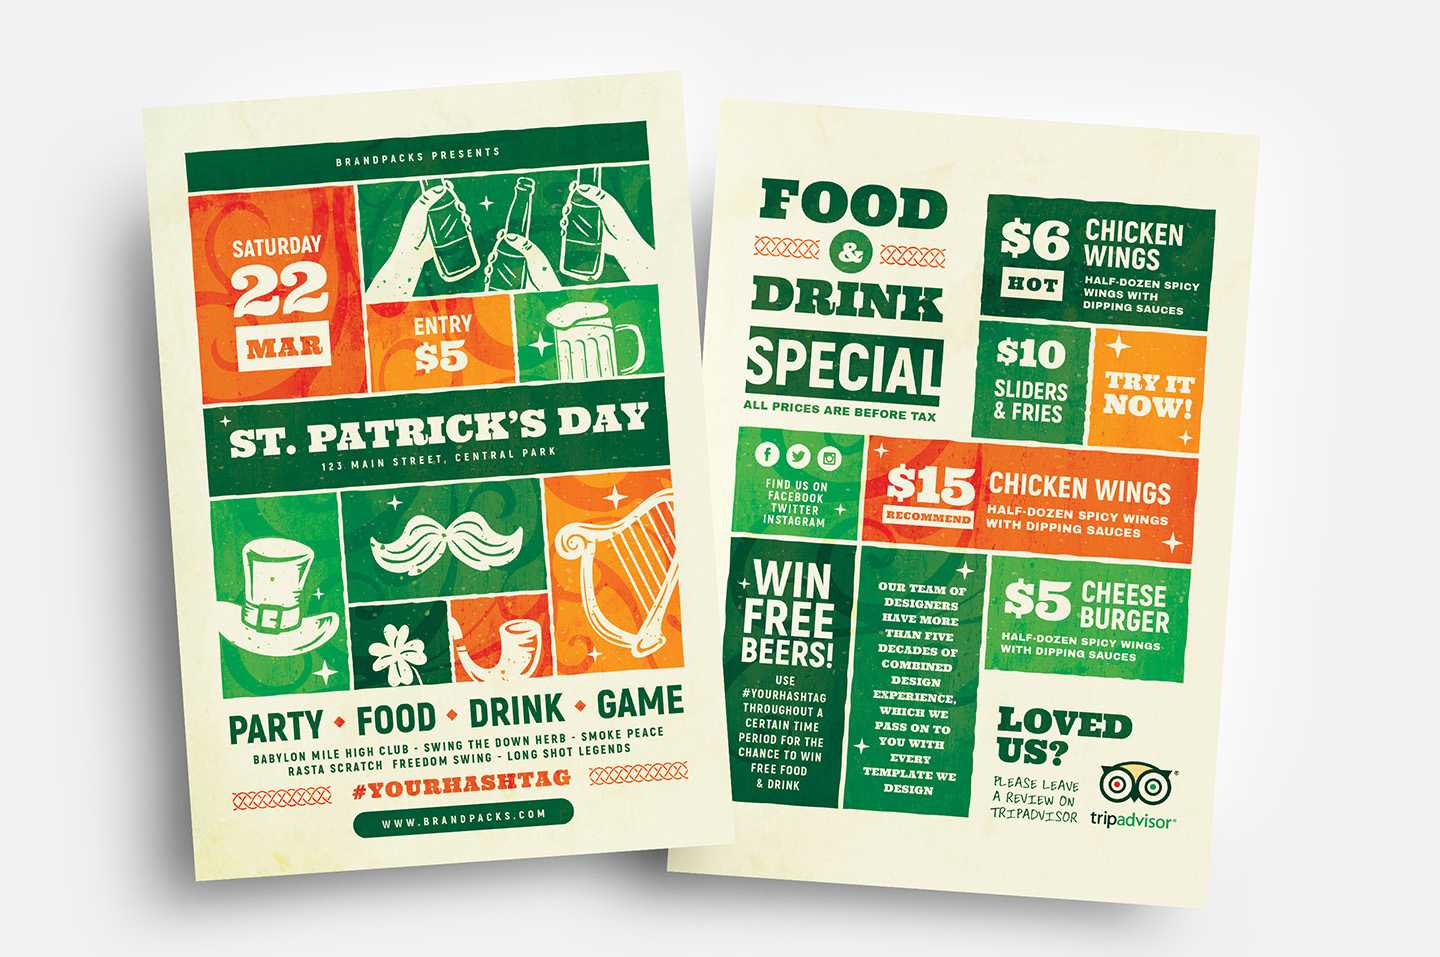 St. Patrick's Day Flyer Template V3 – Brandpacks In Customer Appreciation Day Flyer Template